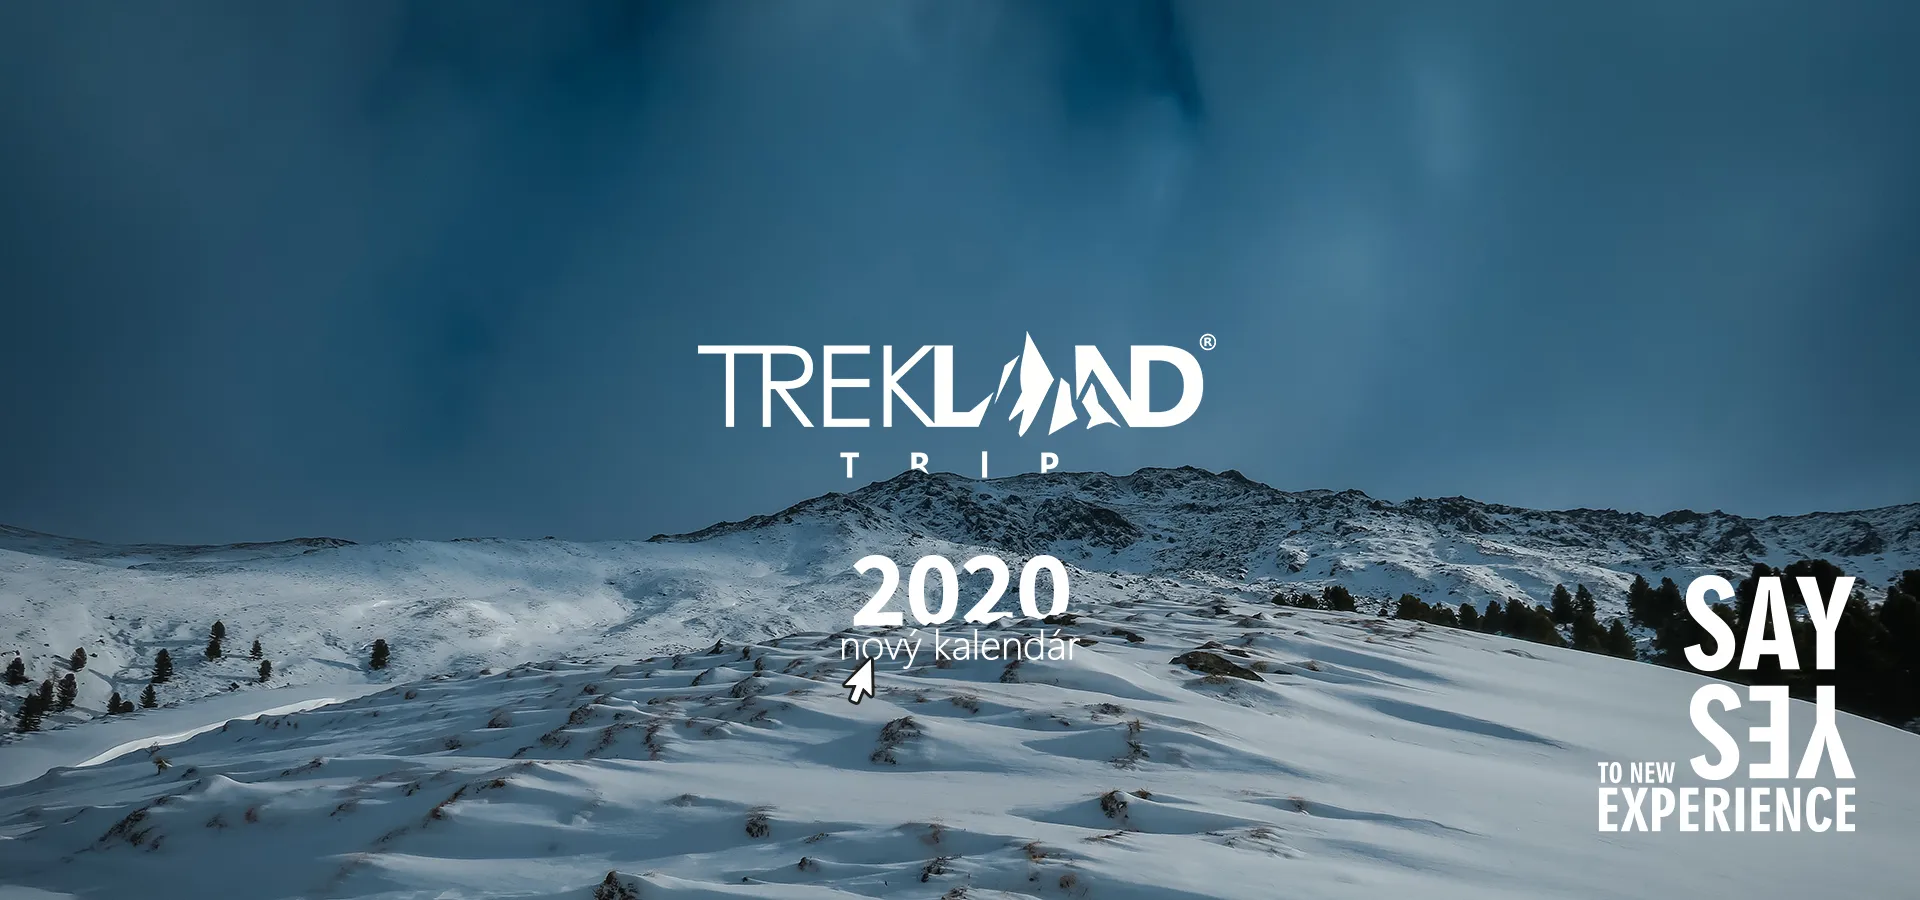 Trekland tripy 2020